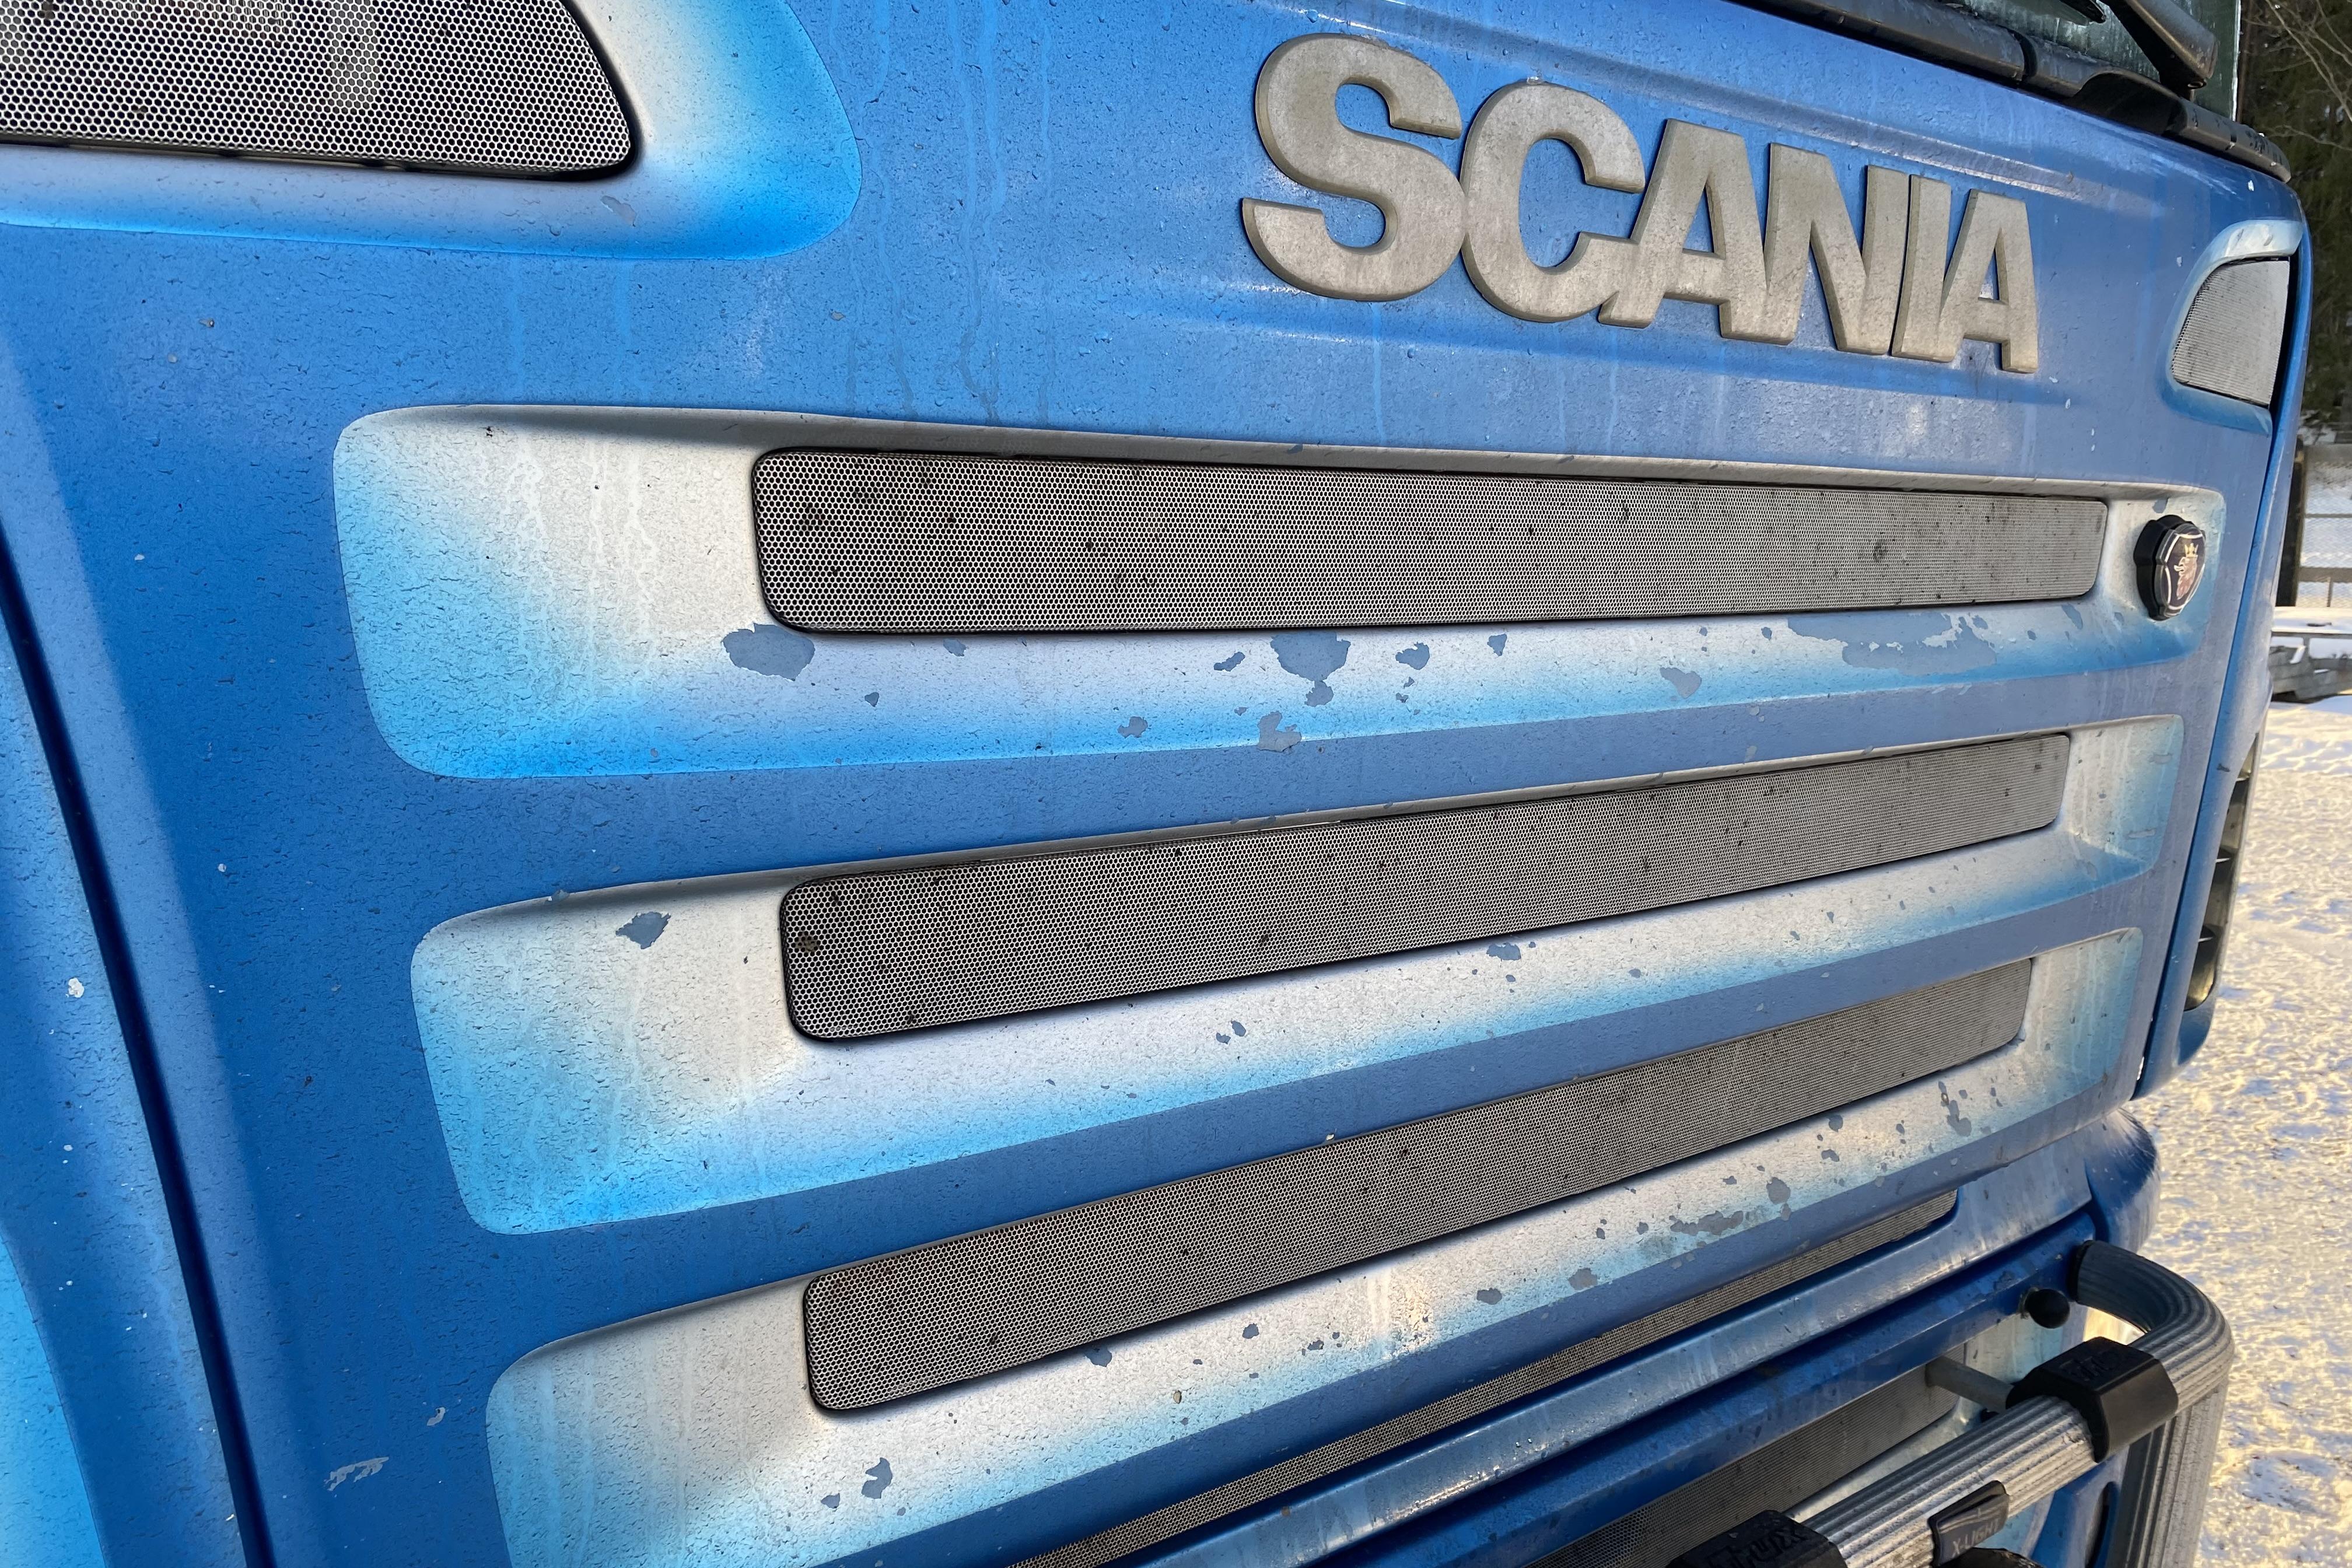 SCANIA R560 - 1 242 911 km - Automatic - blue - 2007